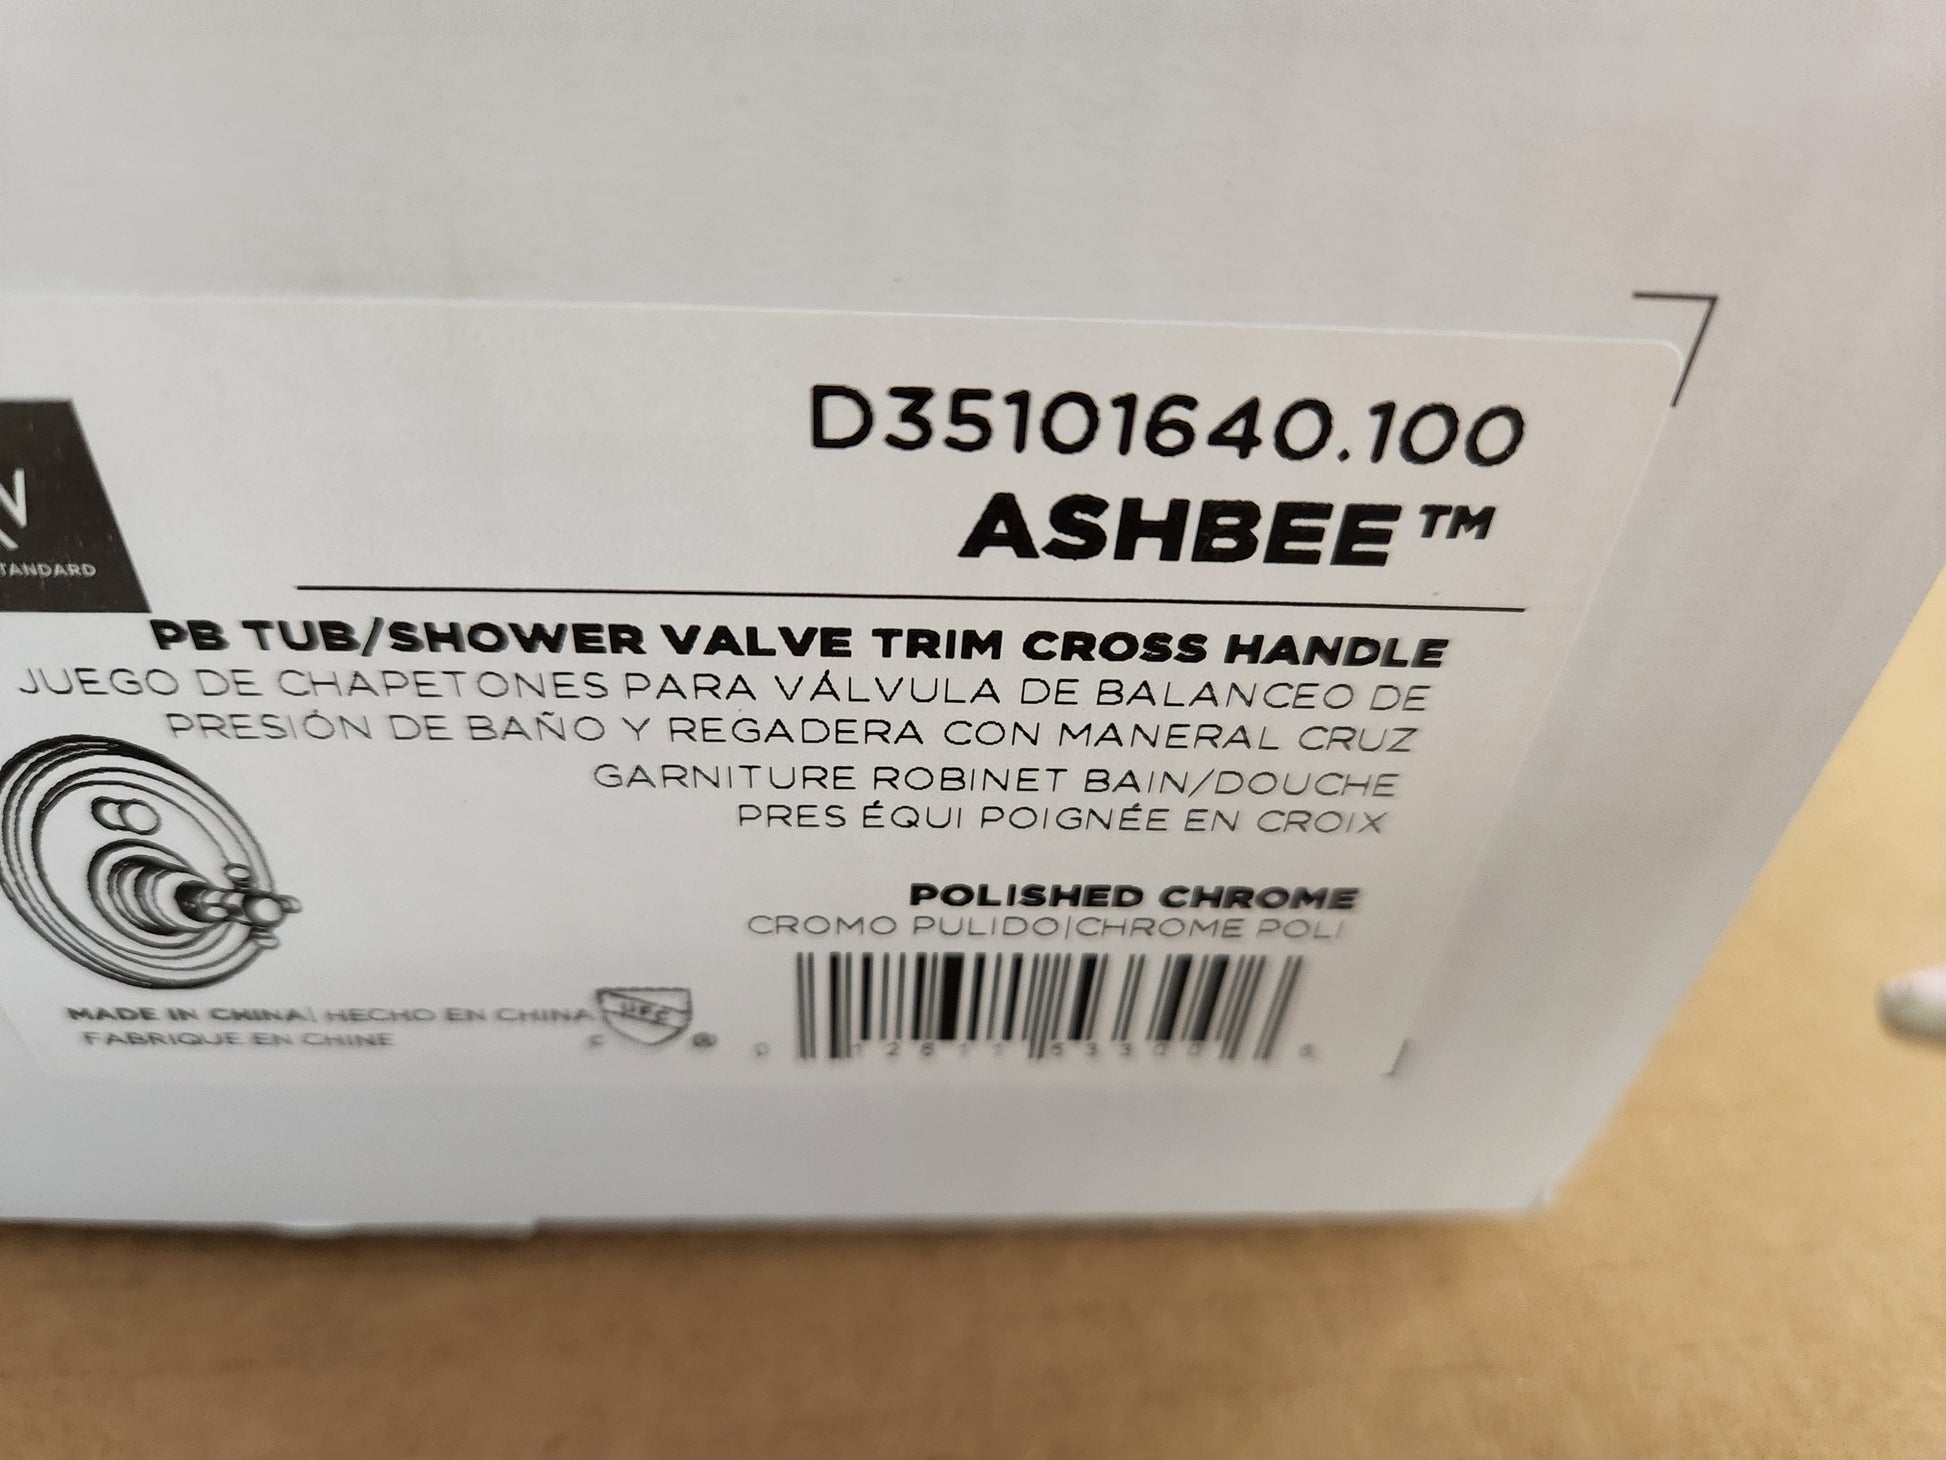 ASHBEE POLISHED CHROME PB TUB/SHOWER TRIM ONLY CROSS HANDLE